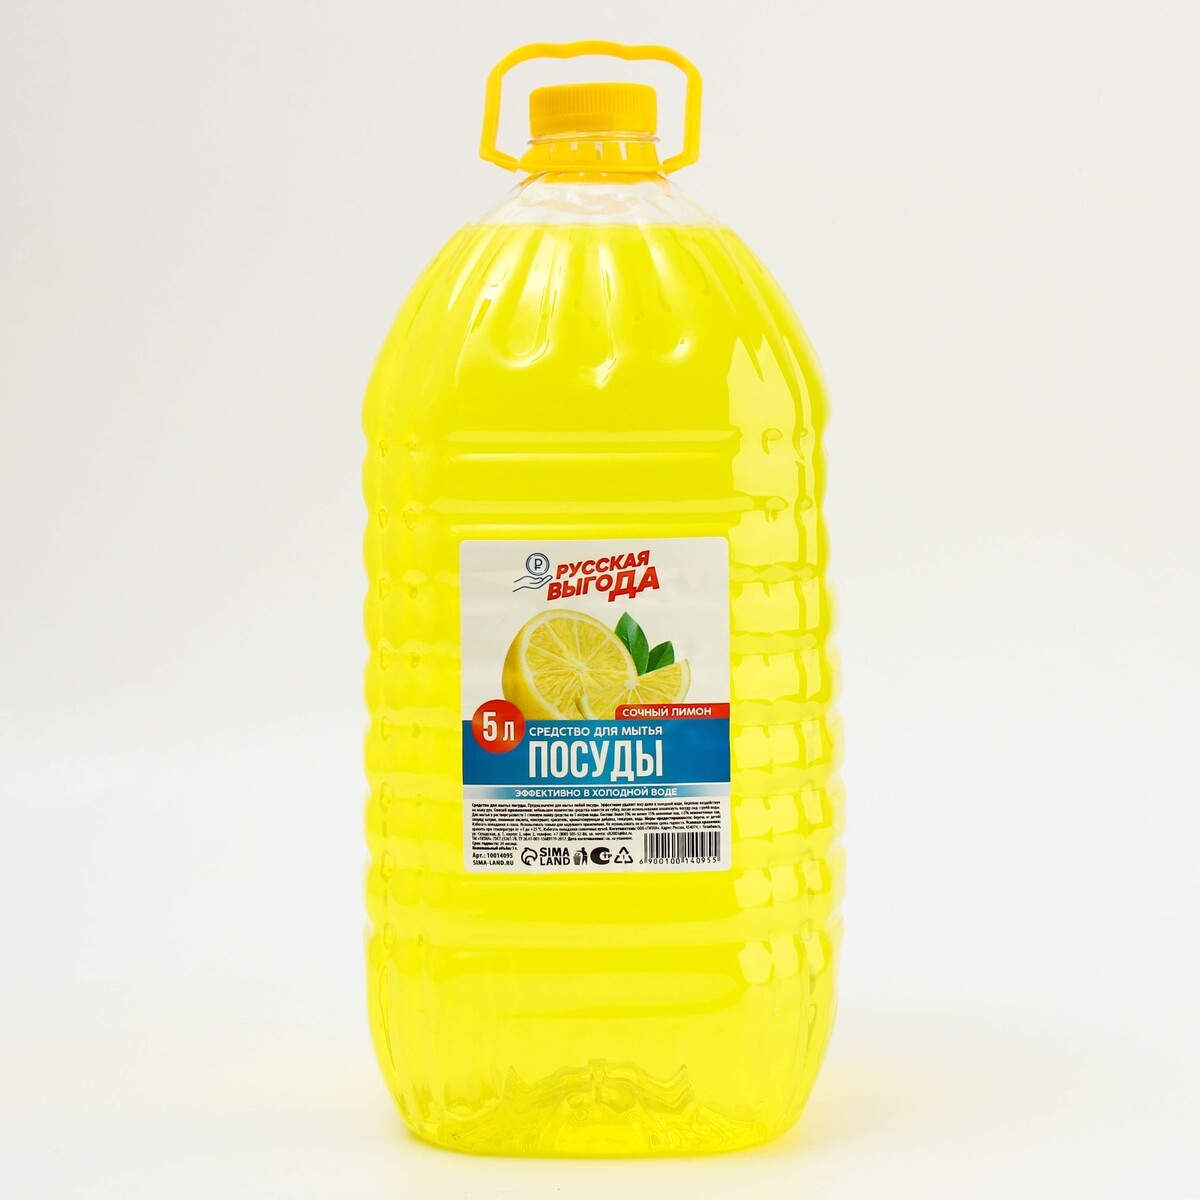 Средство для мытья посуды, аромат лимон, 5 л, русская выгода русская тайна казановы